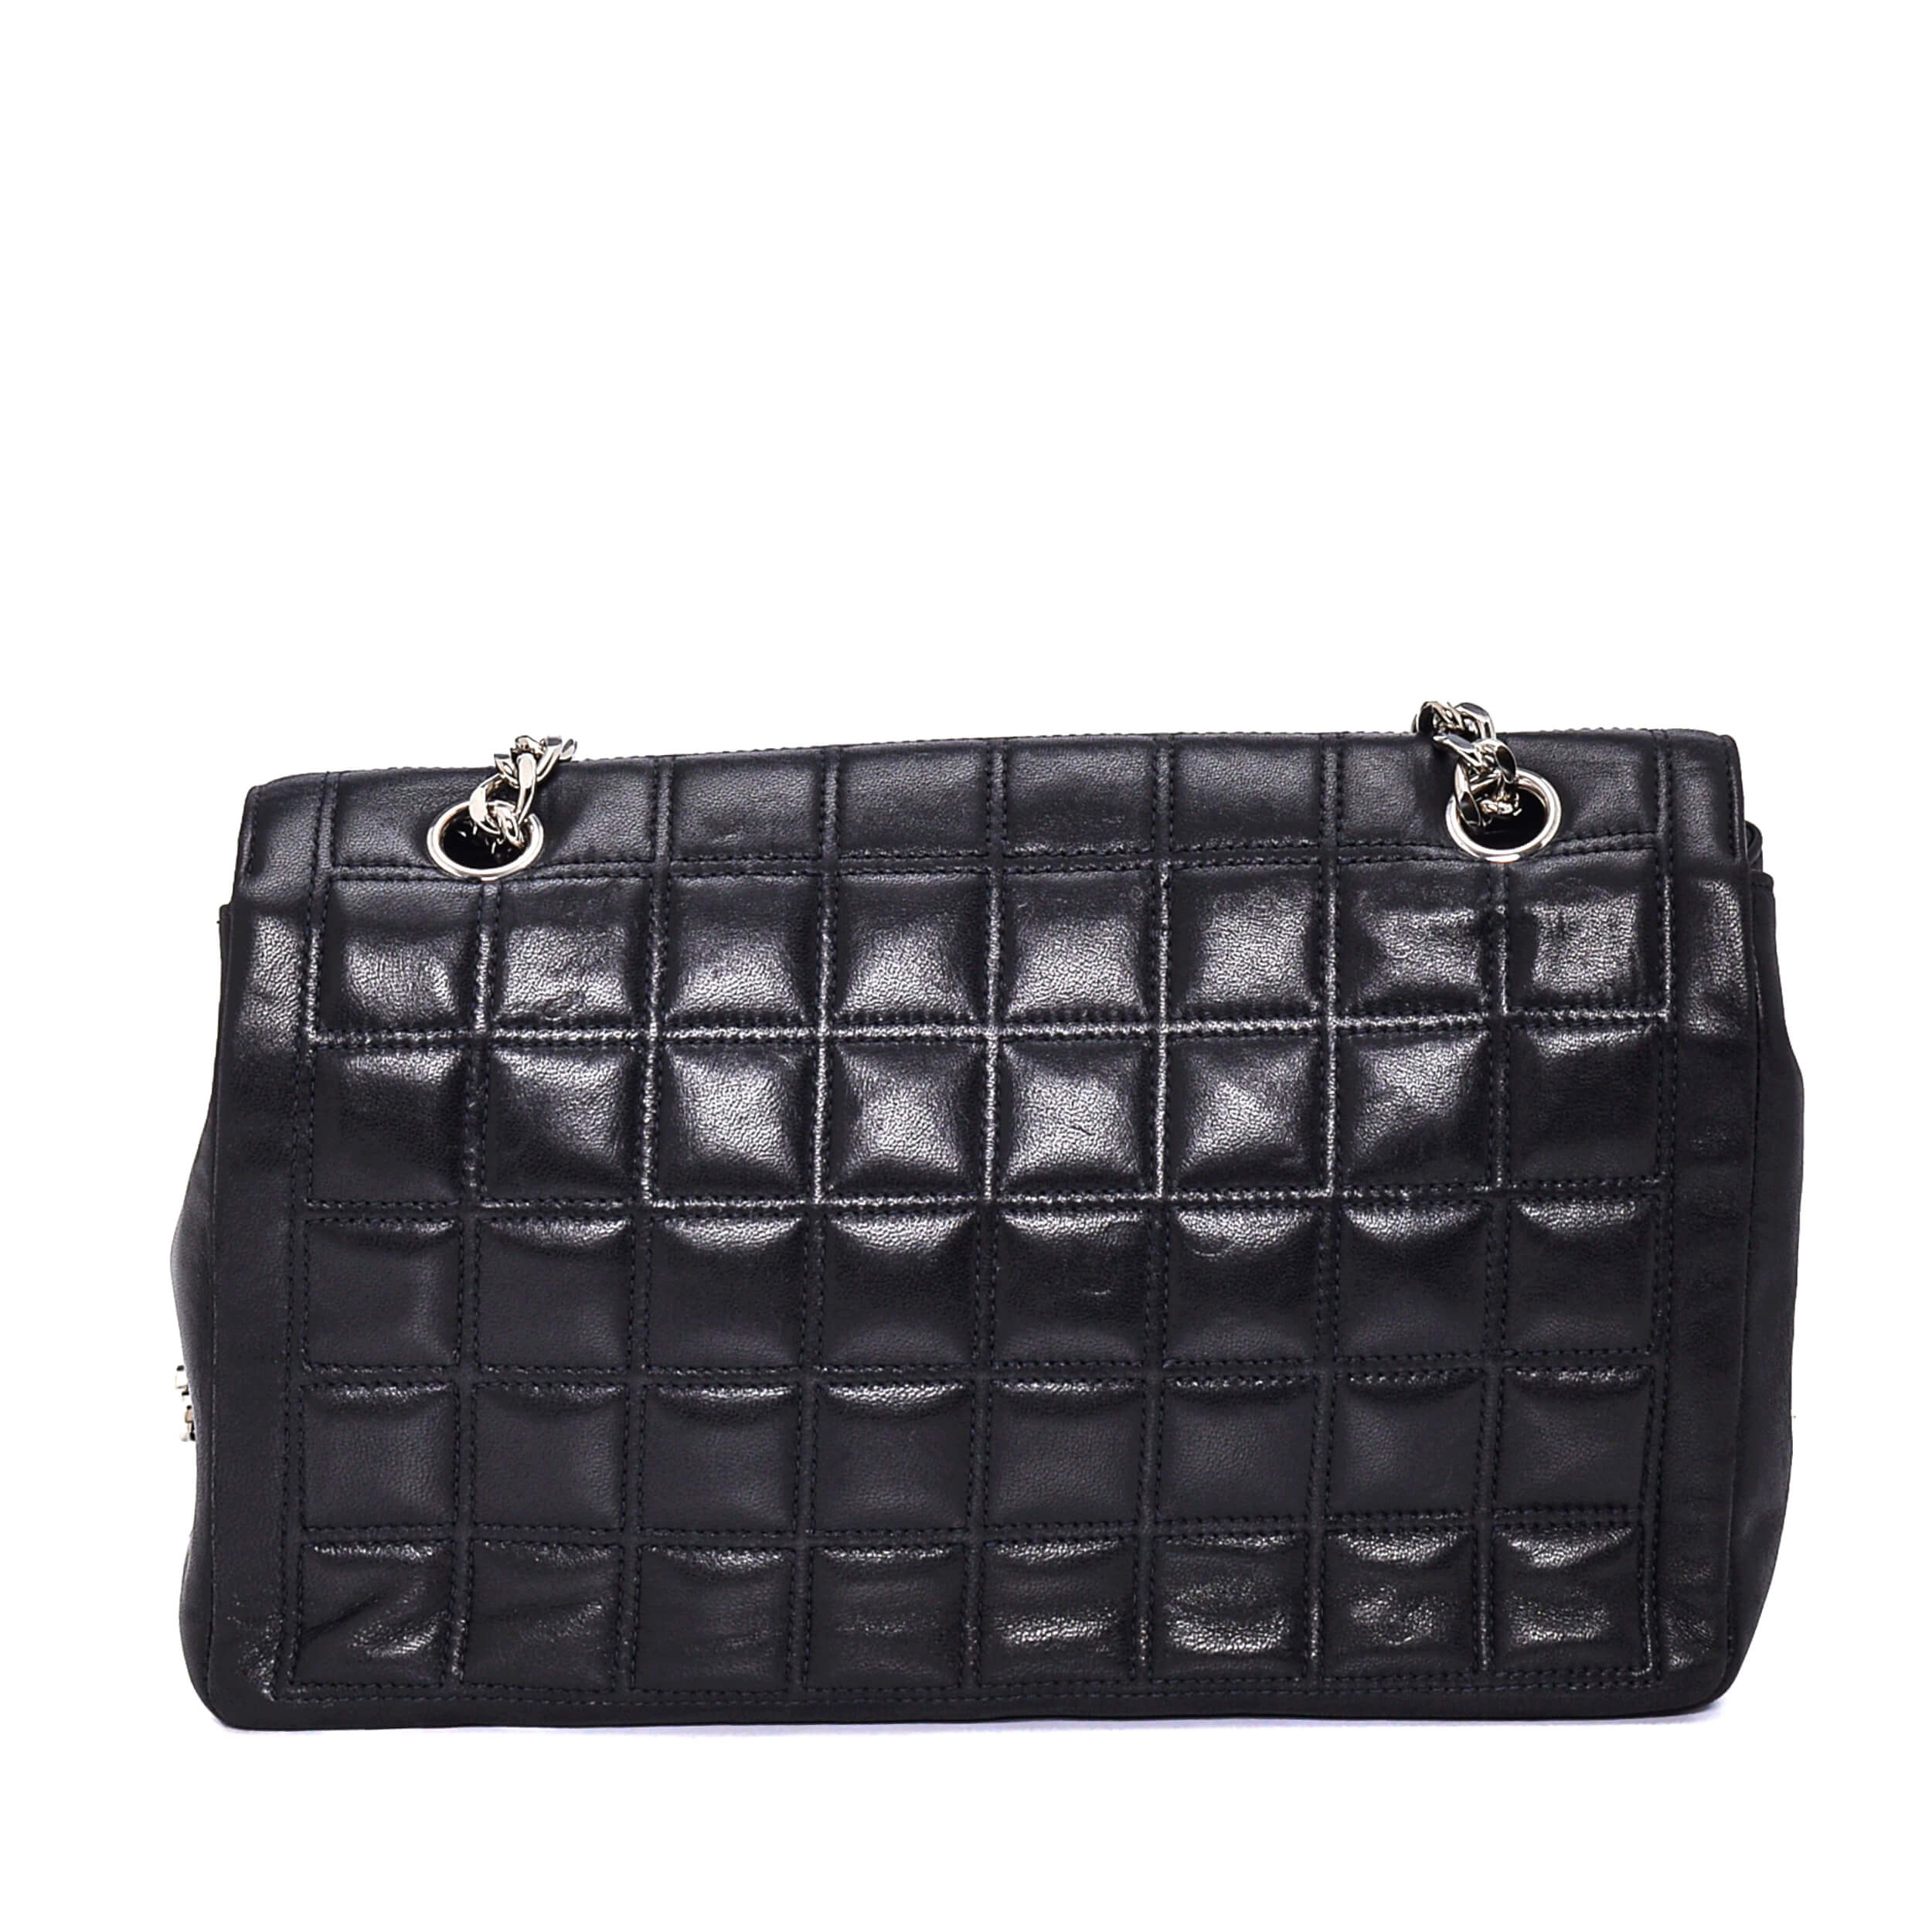 Chanel - Black Capitone CC Crystal Detail Reissue Flap Bag